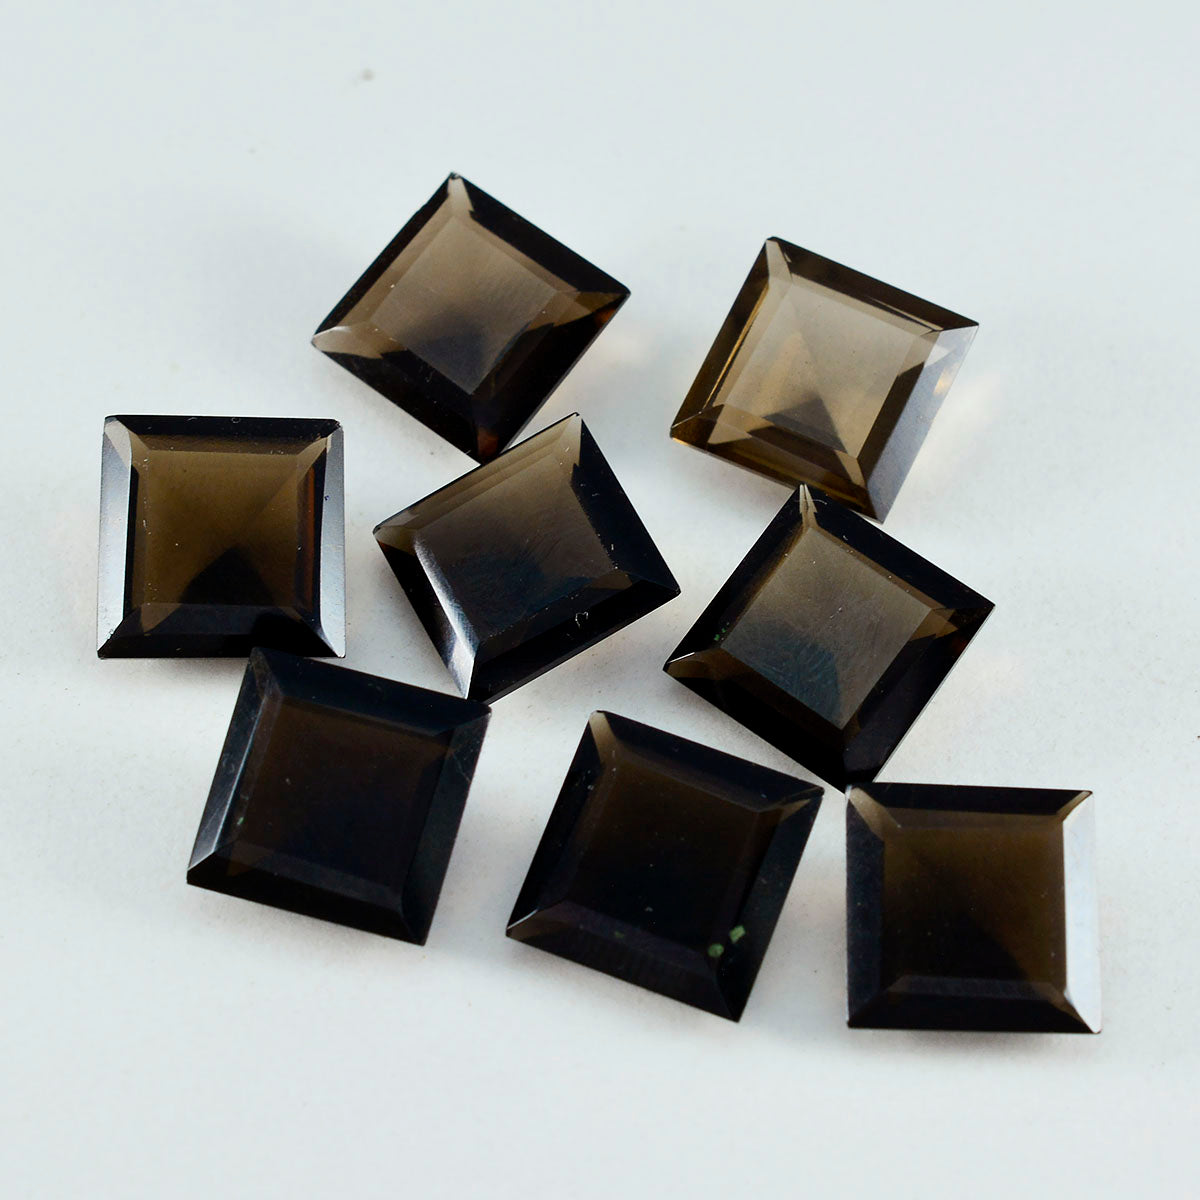 Riyogems 1PC Natural Brown Smoky Quartz Faceted 13x13 mm Square Shape amazing Quality Gemstone